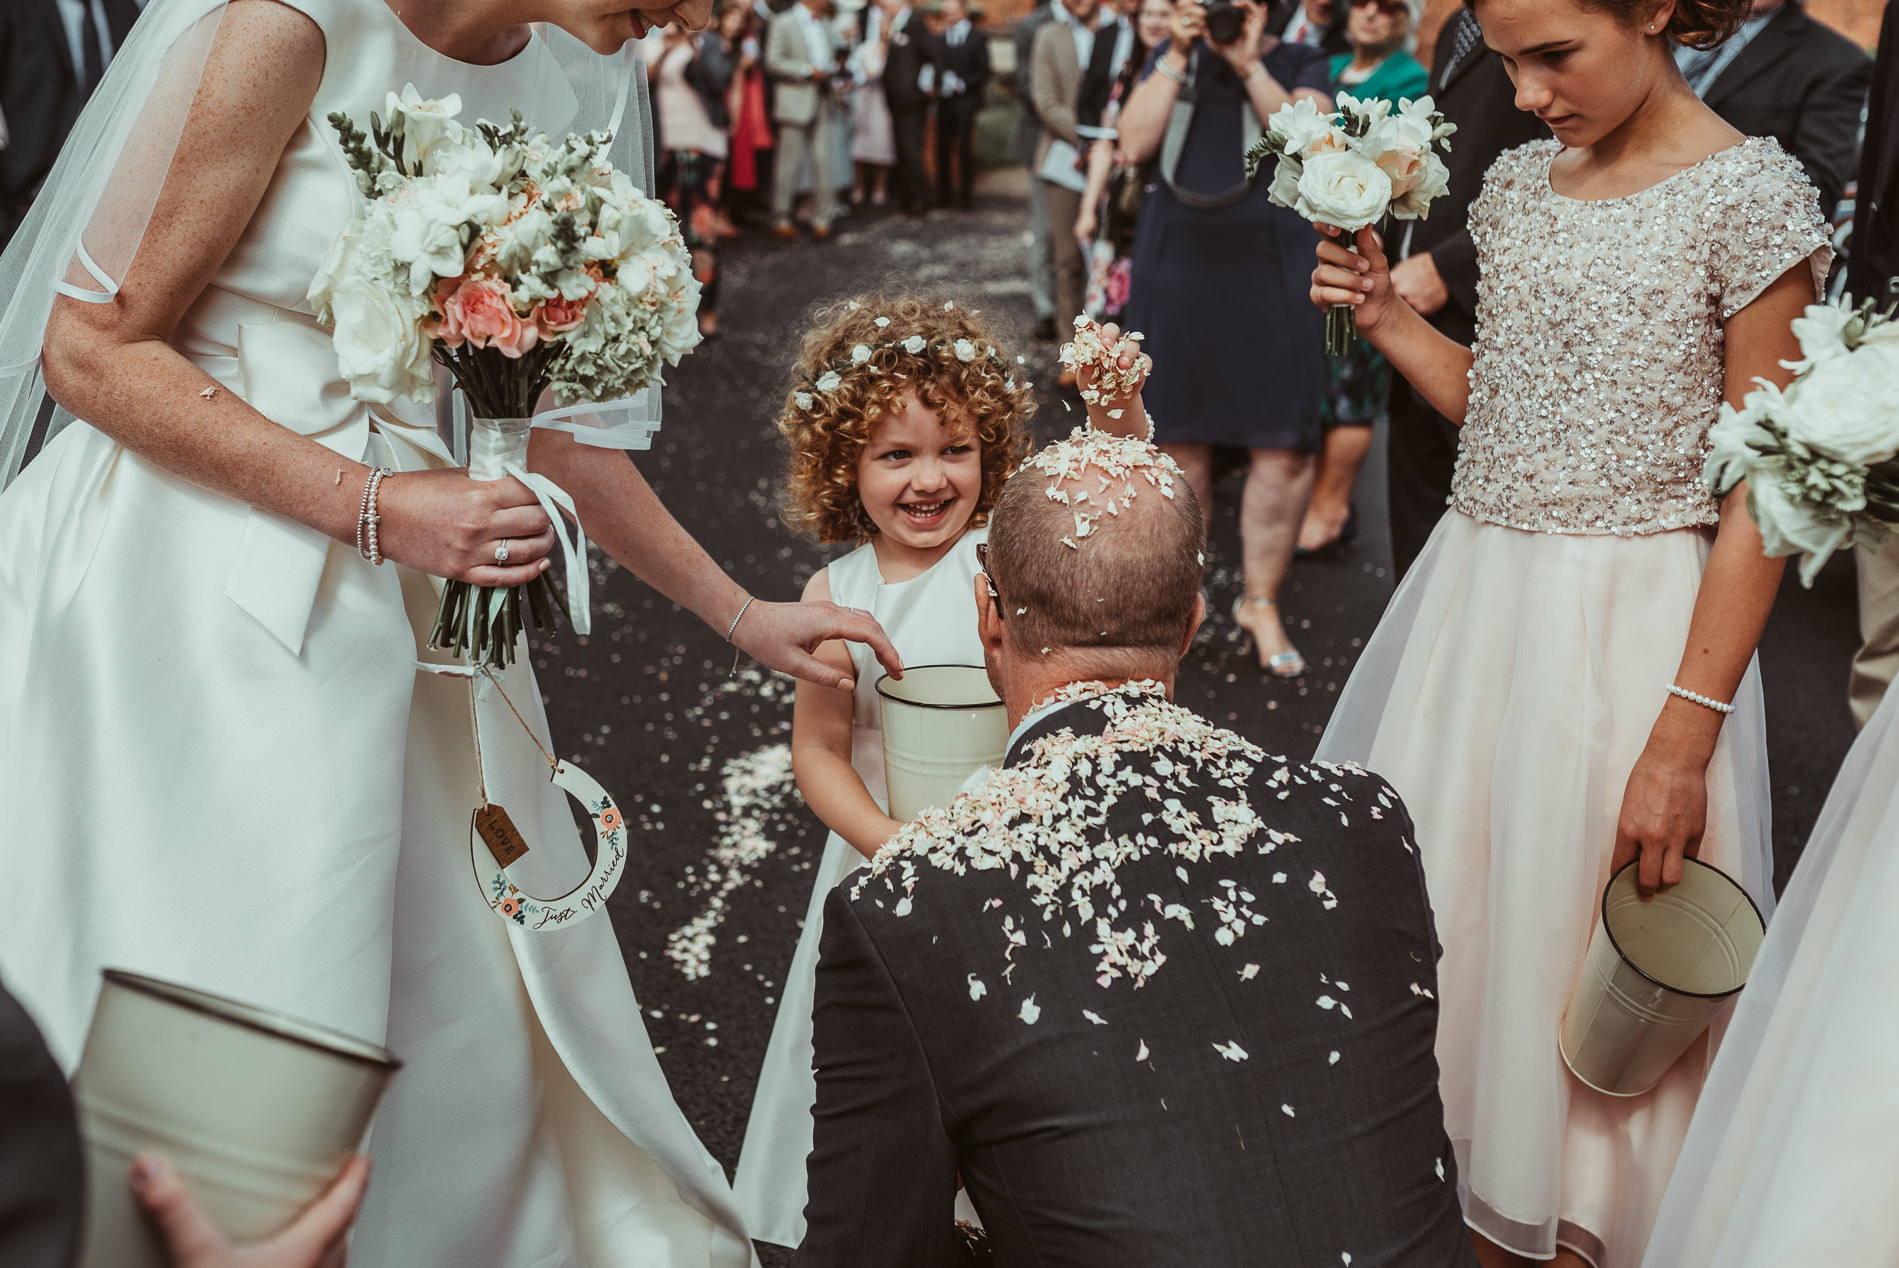 Throwing Confetti Market Drayton Wedding - Jess Soper